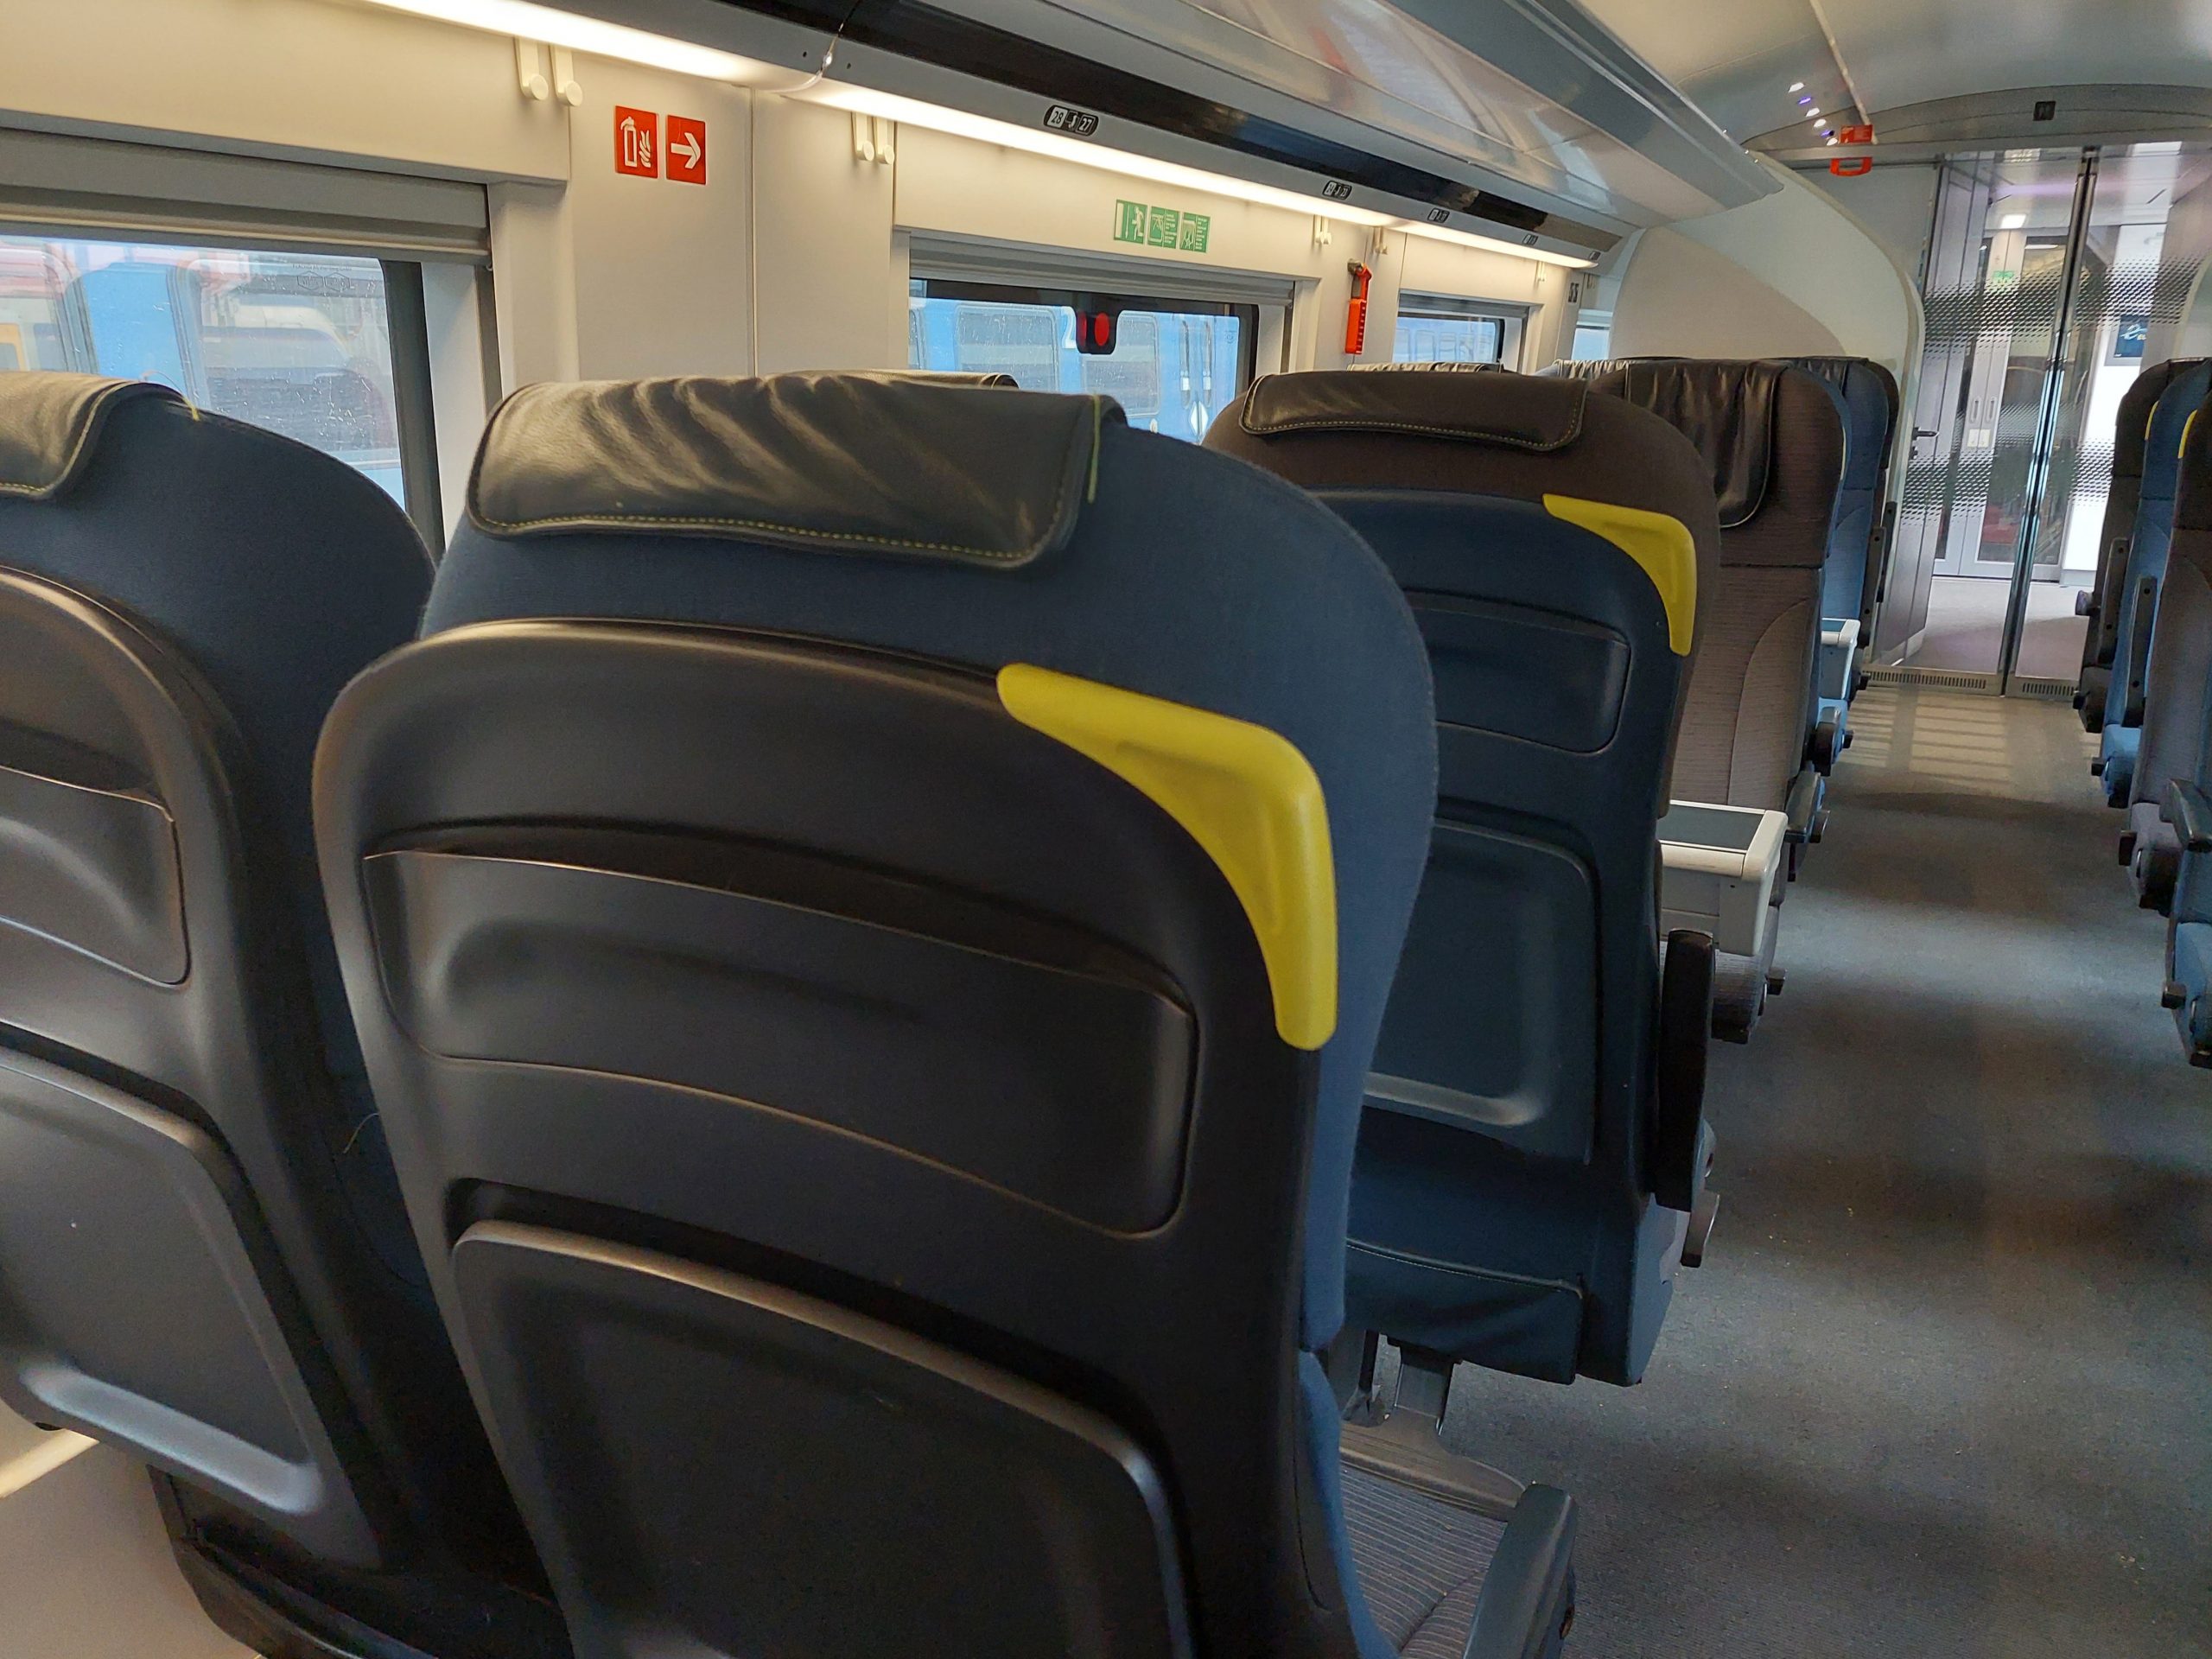 Eurostar reis van Londen naar Amsterdam